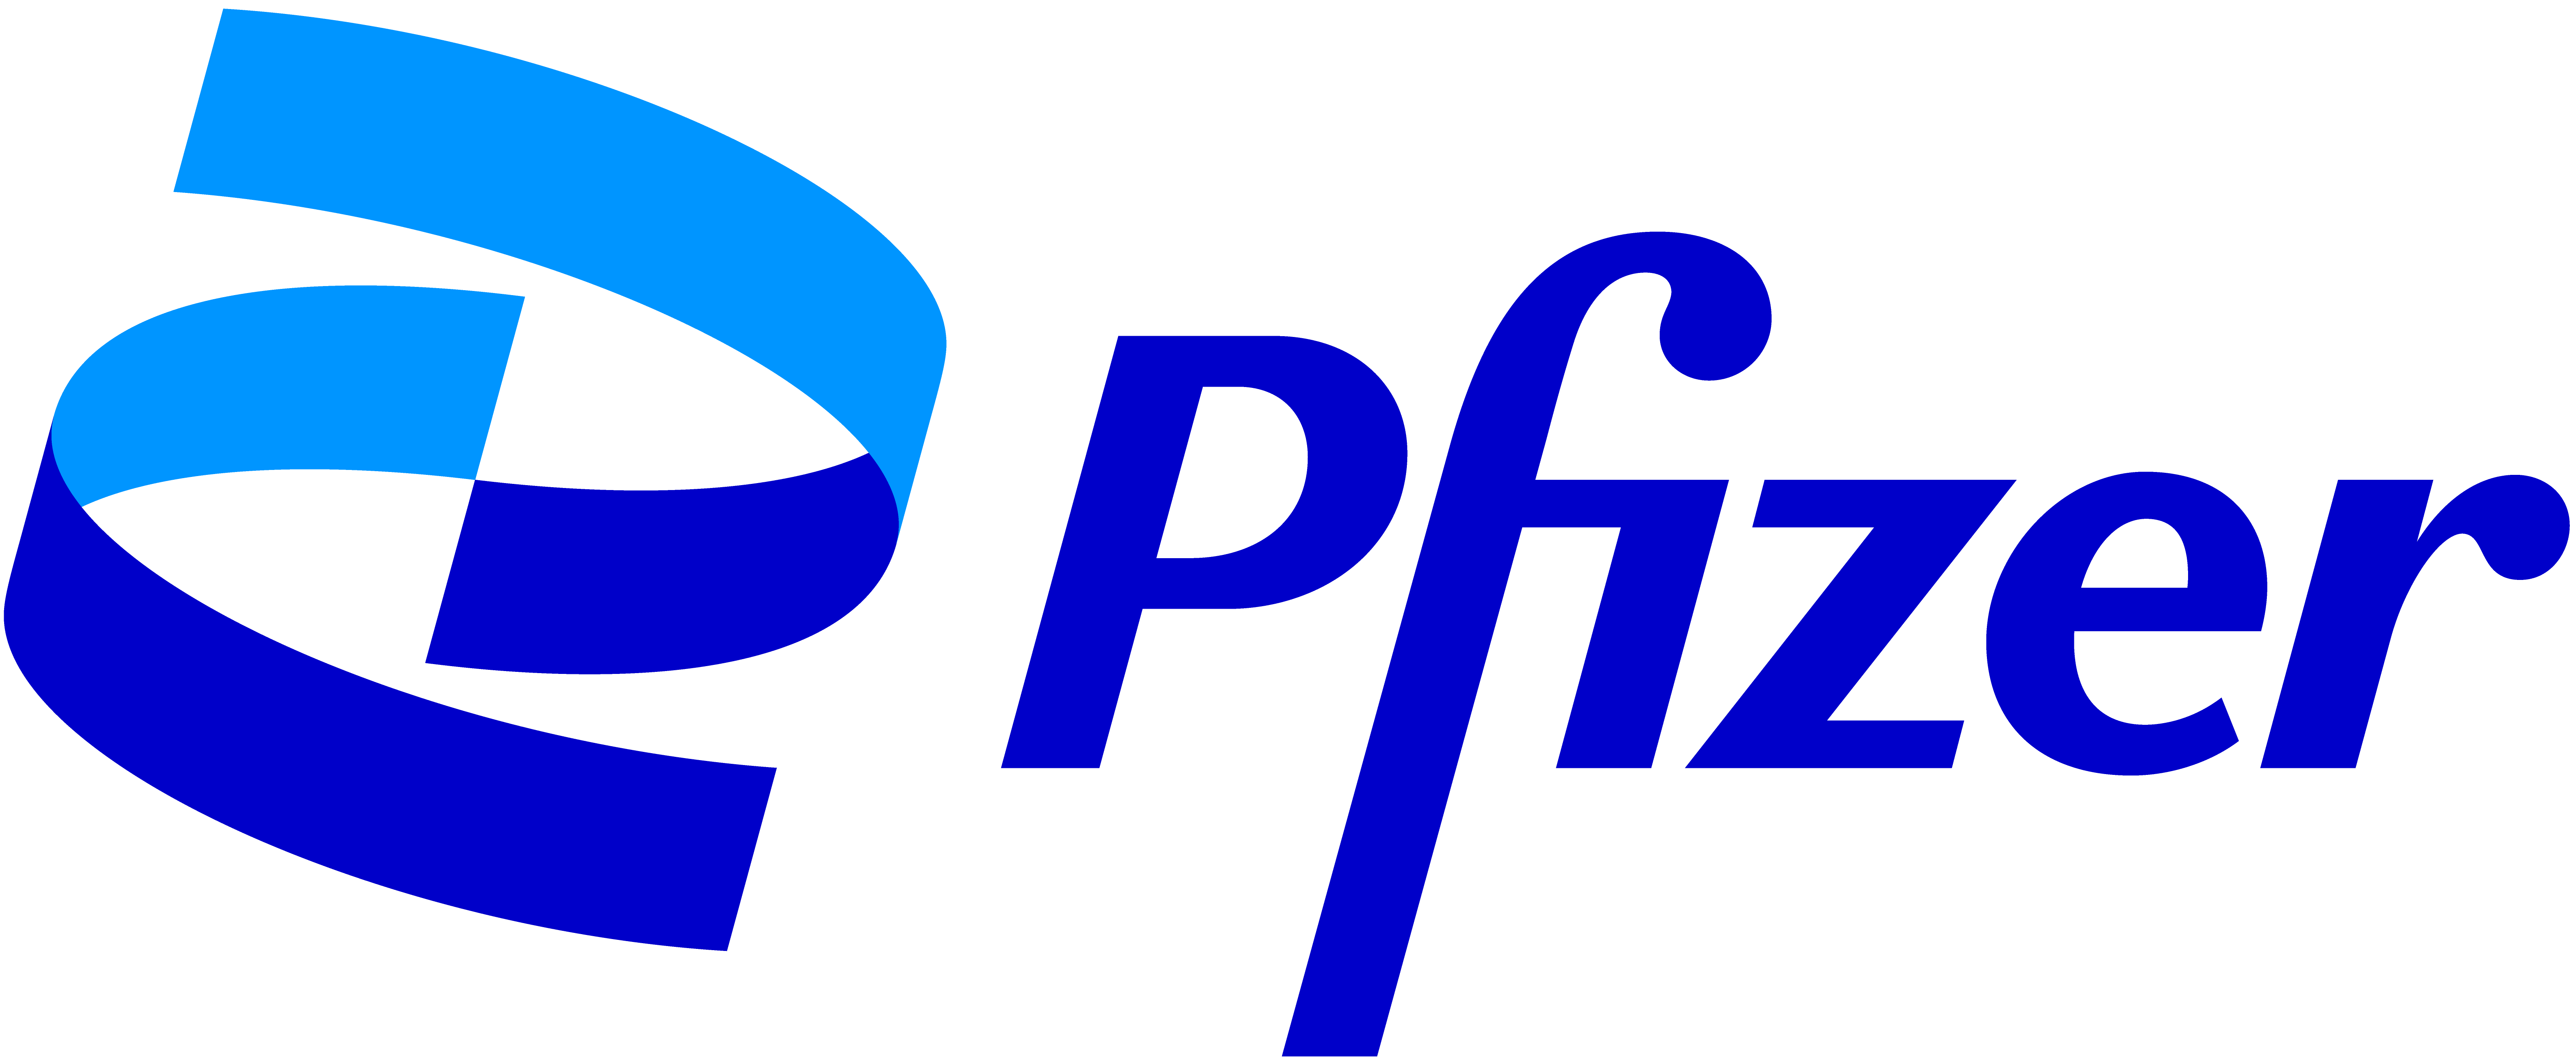 Pfizer company image